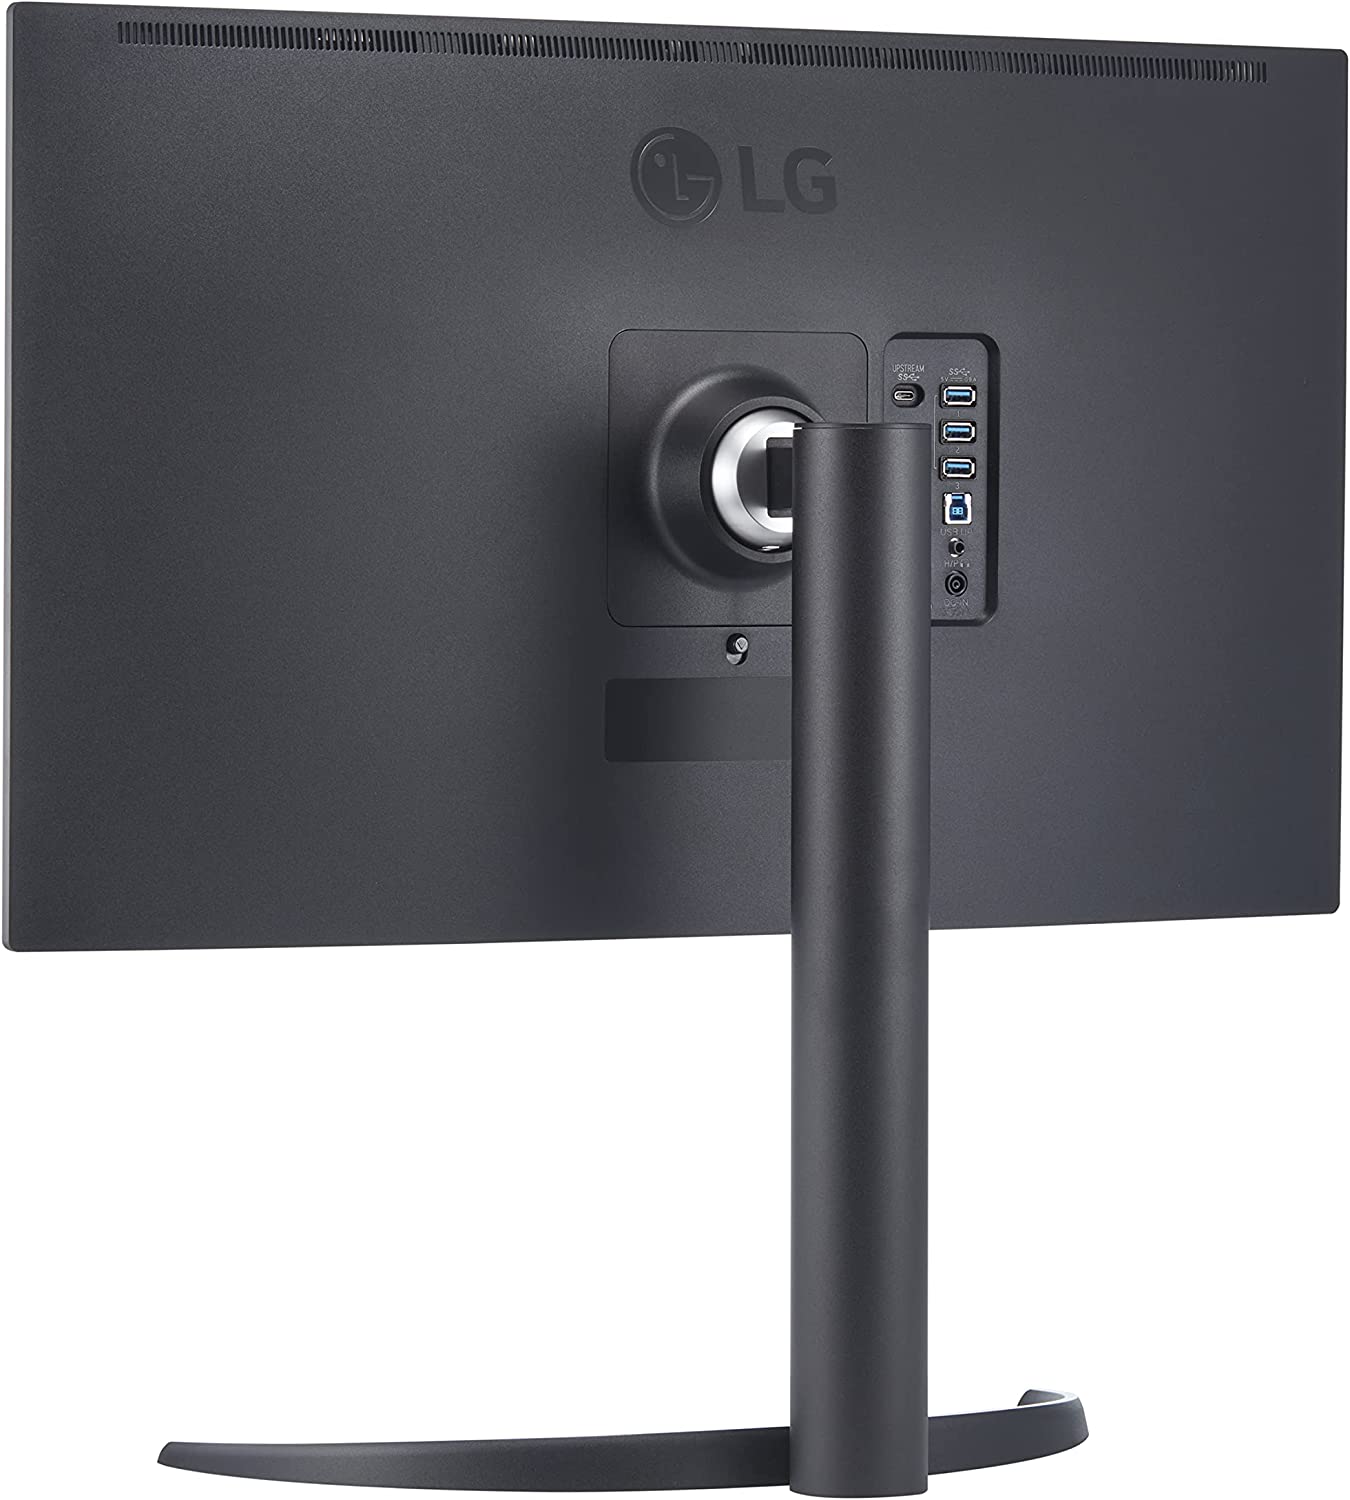 LG 27EP950-B 27” Ultrafine UHD (3840 x 2160) OLED Pro Display with Adobe RBG / DCI-P3 99%, VESA Display HDR 400 True Black, 1M:1 Contrast Ratio and Tilt/Height/Pivot Adjustable Stand - Black